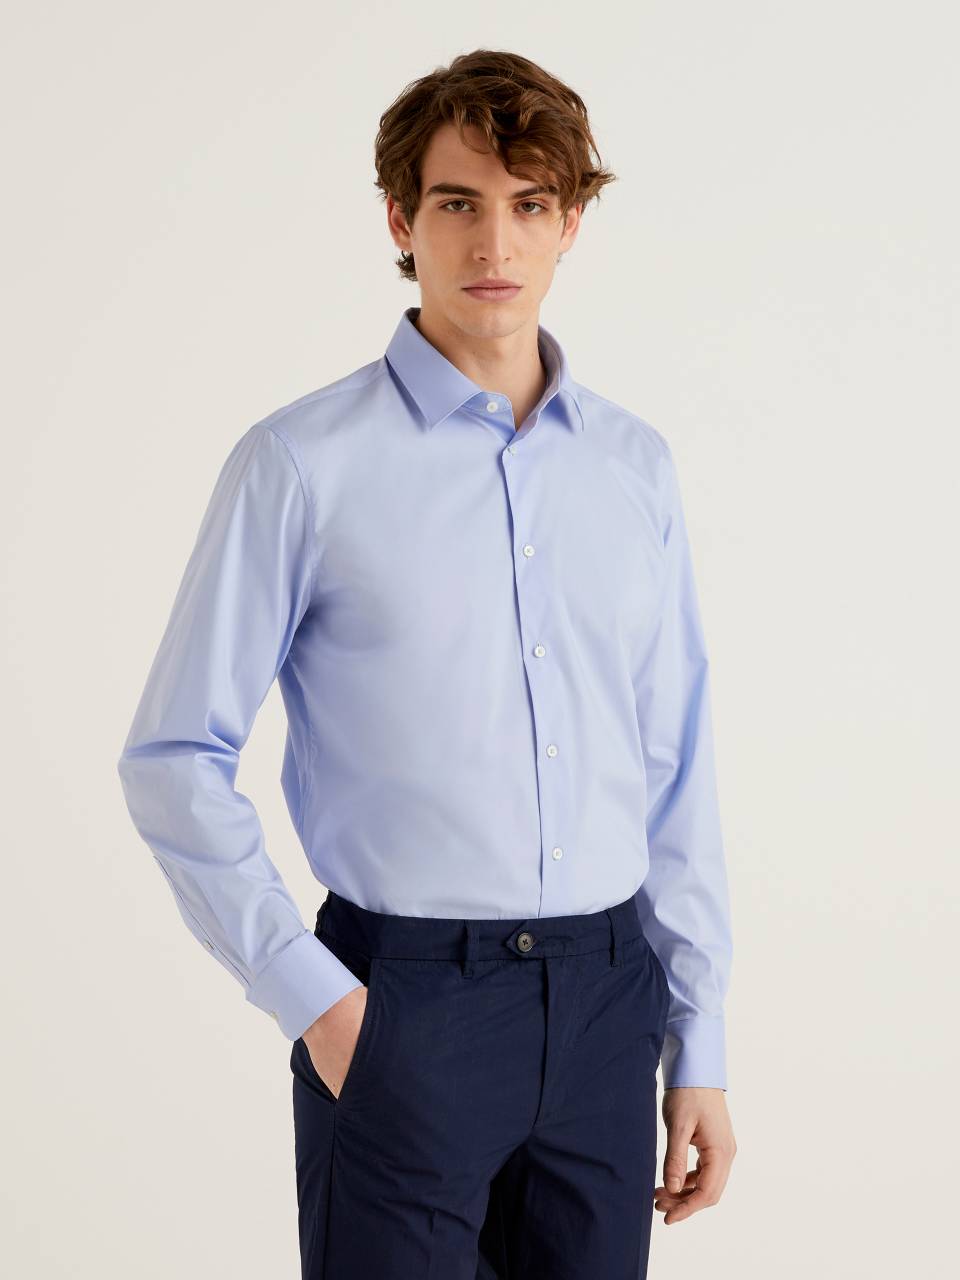 Benetton Solid color slim fit shirt. 1